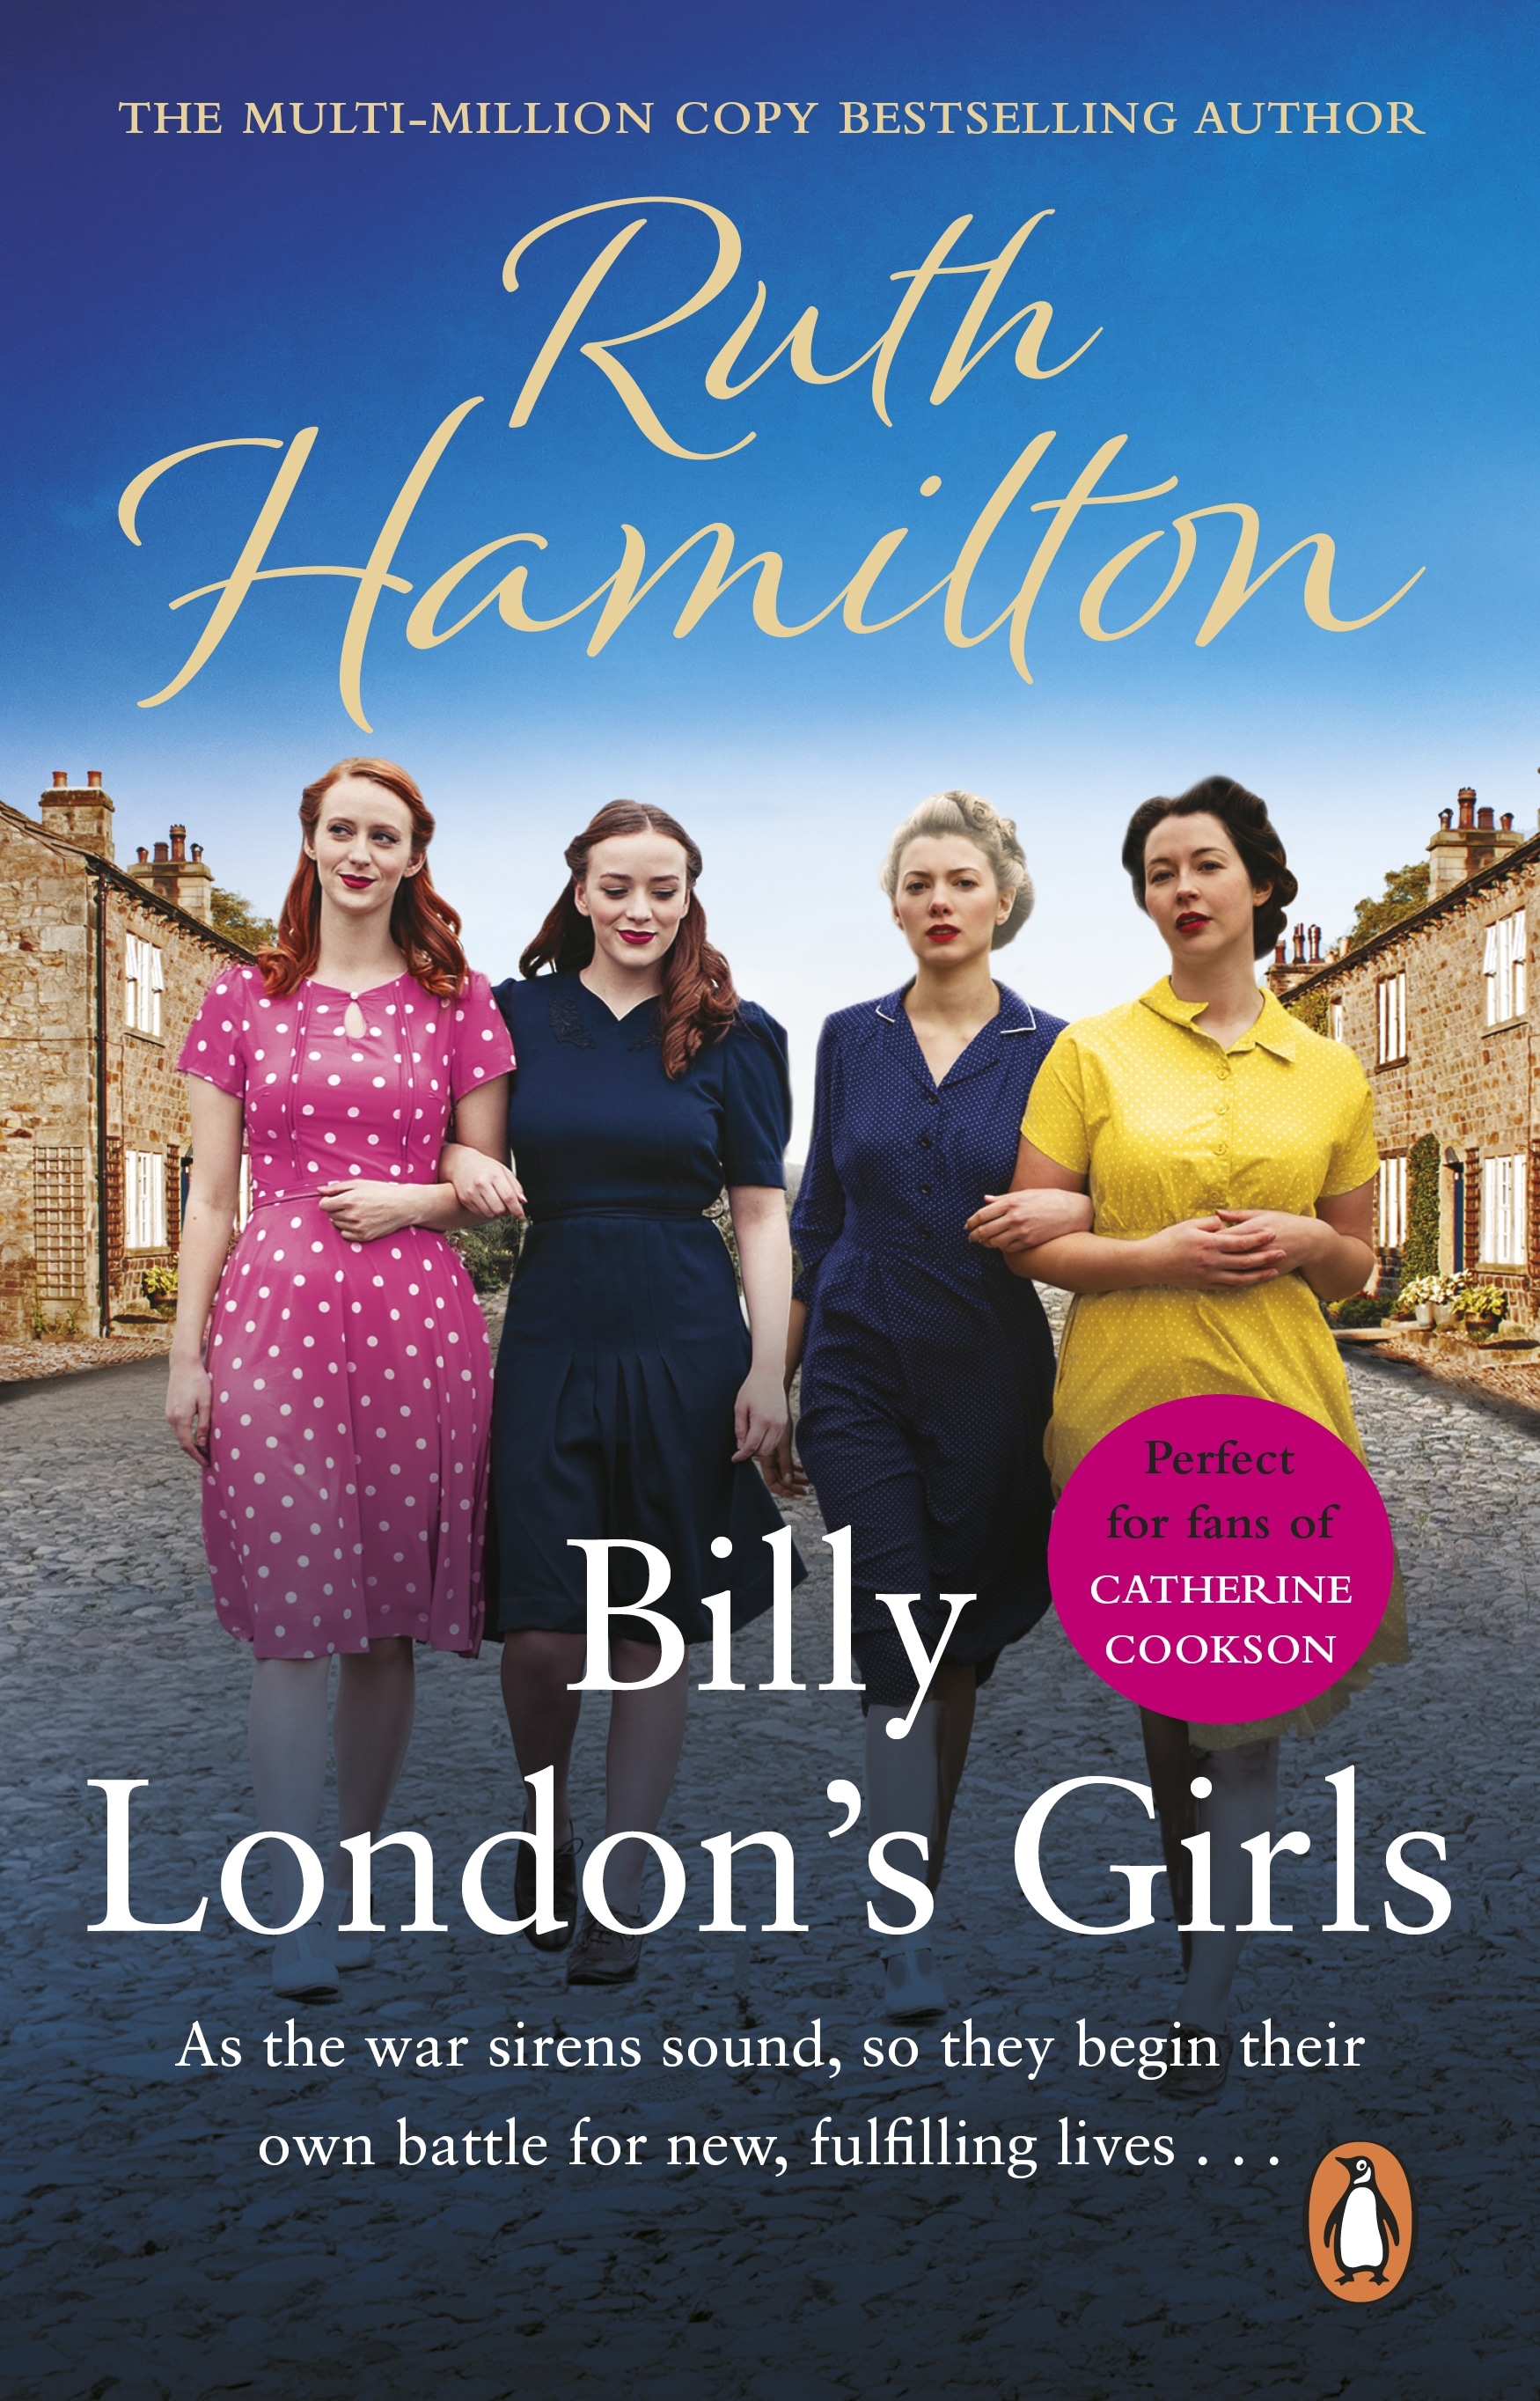 Book “Billy London's Girls” by Ruth Hamilton — January 1, 2098